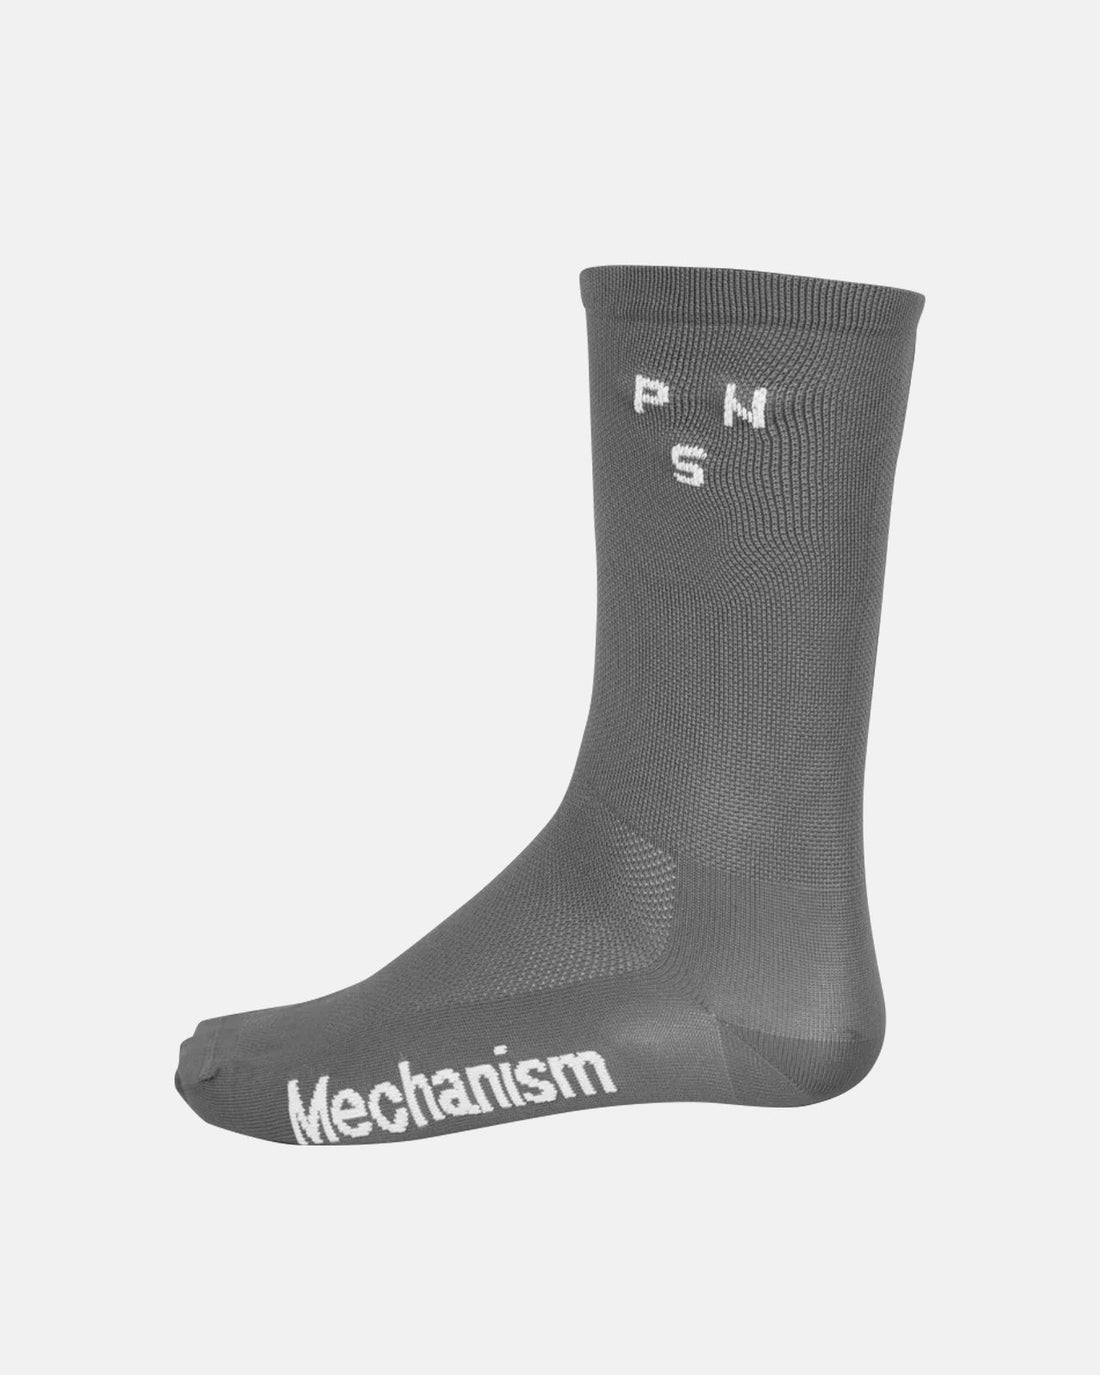 Mechanism Socks - Medium Grey - Pas Normal Studios